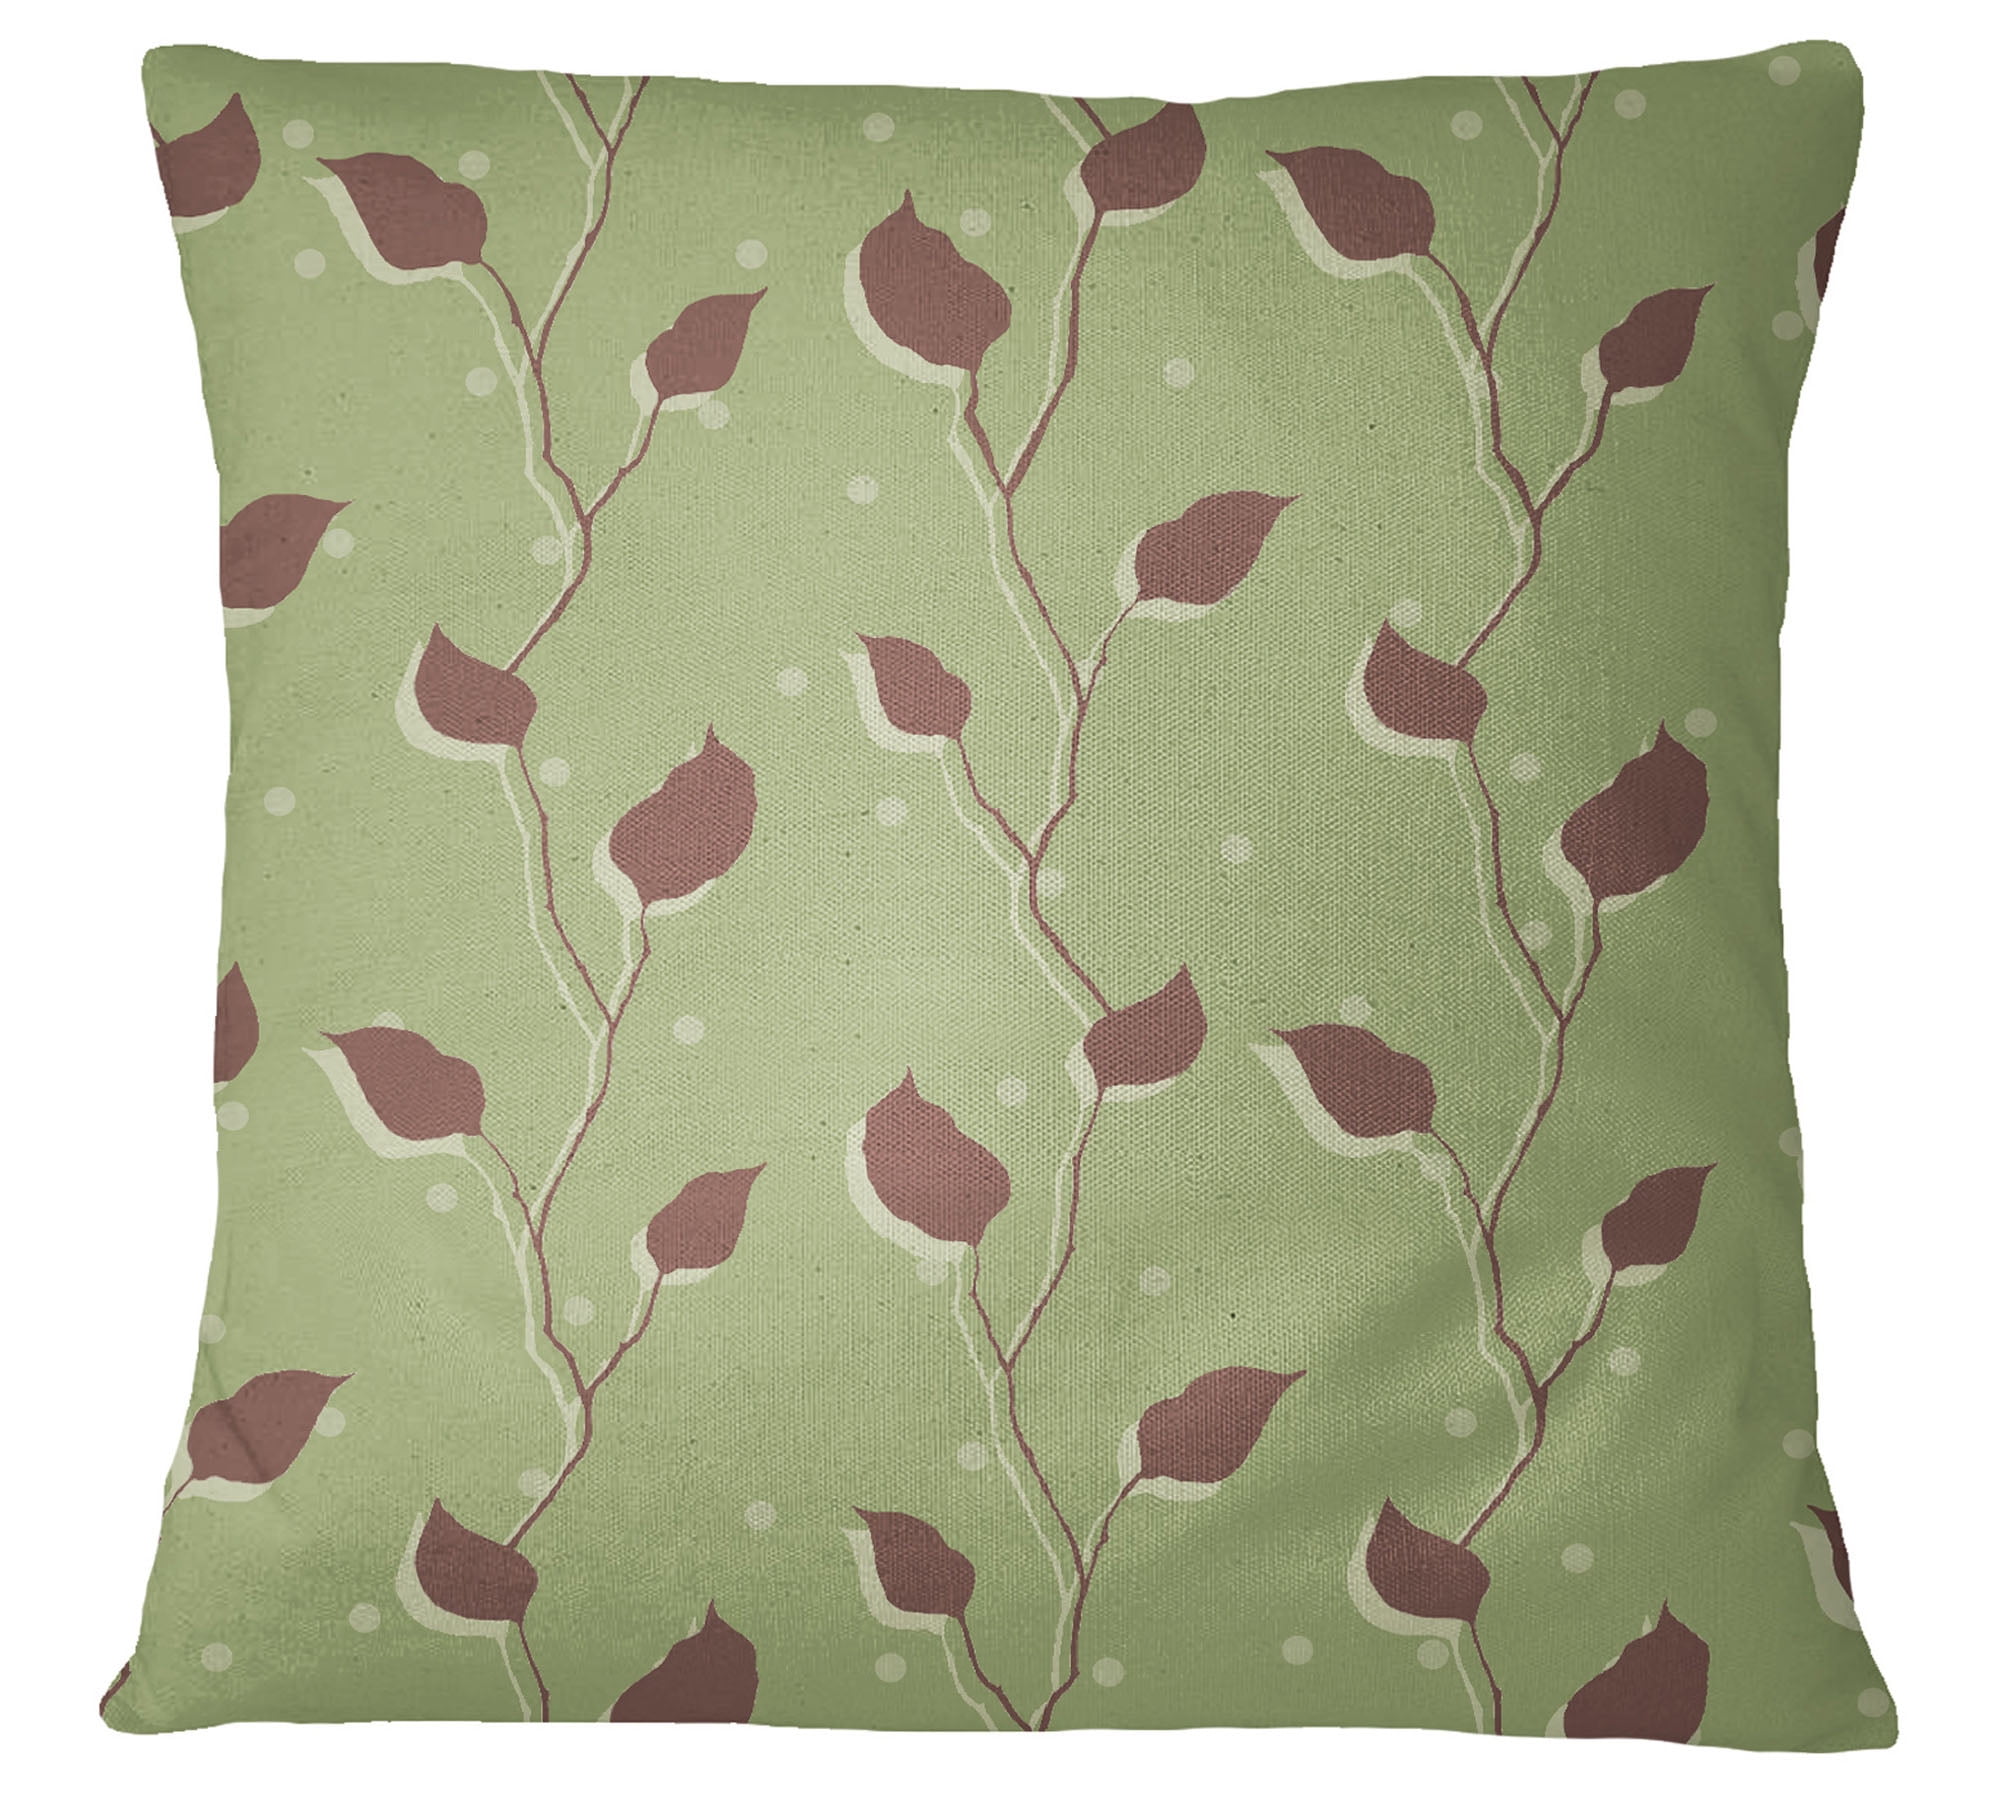 Details about   Green Cut Velvet Fabric Cushion Cover Pillowcase Sofa Pillow Cover Home Textiles 